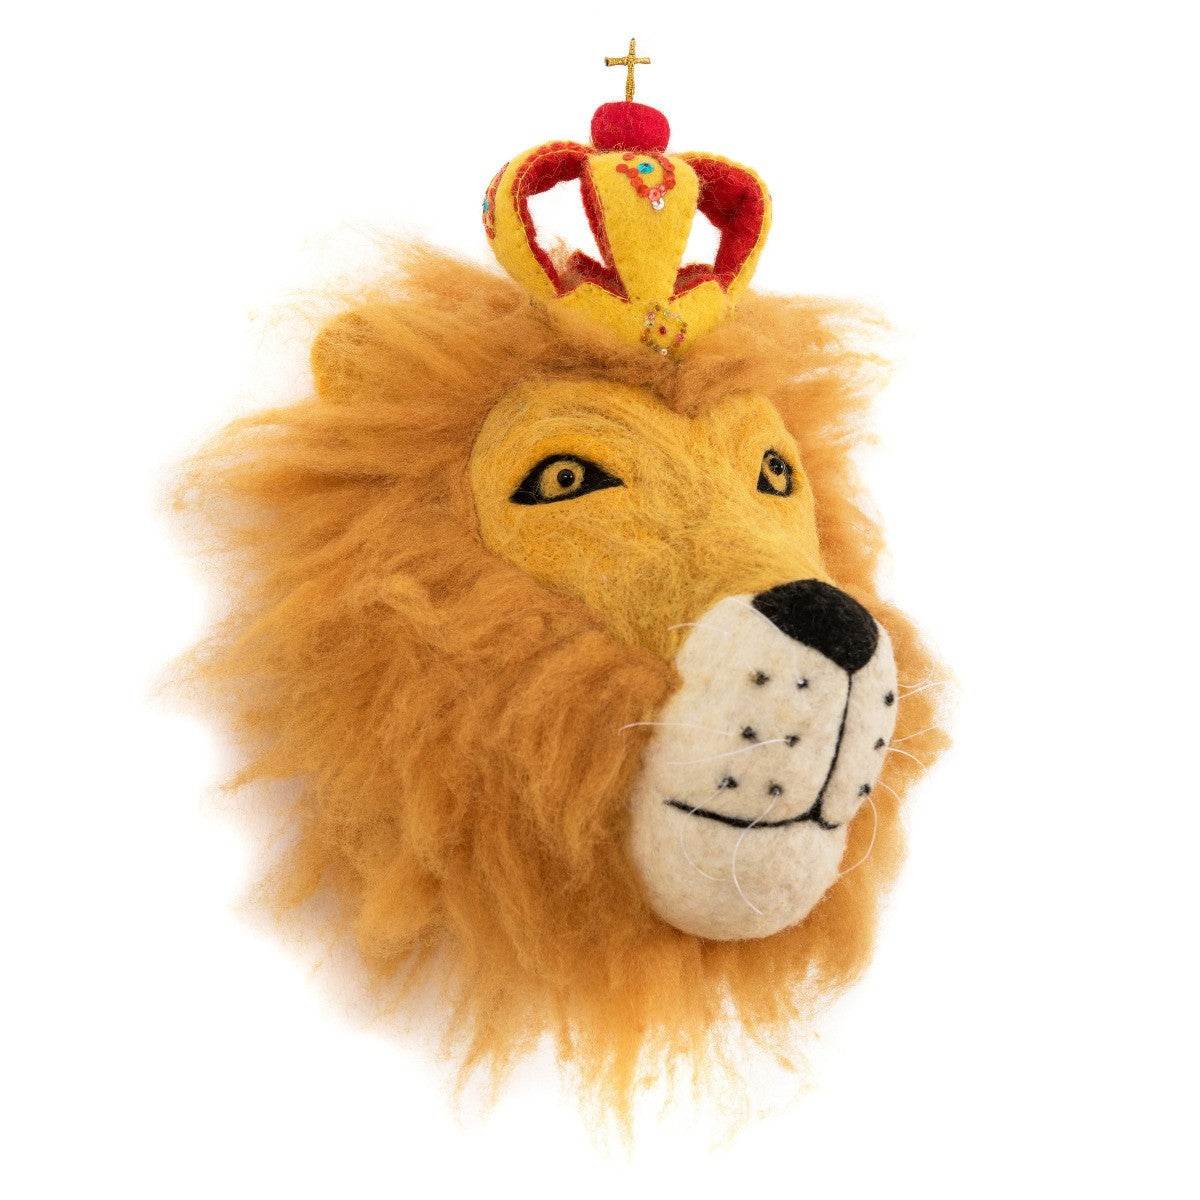 Prince Leopold the Lion head